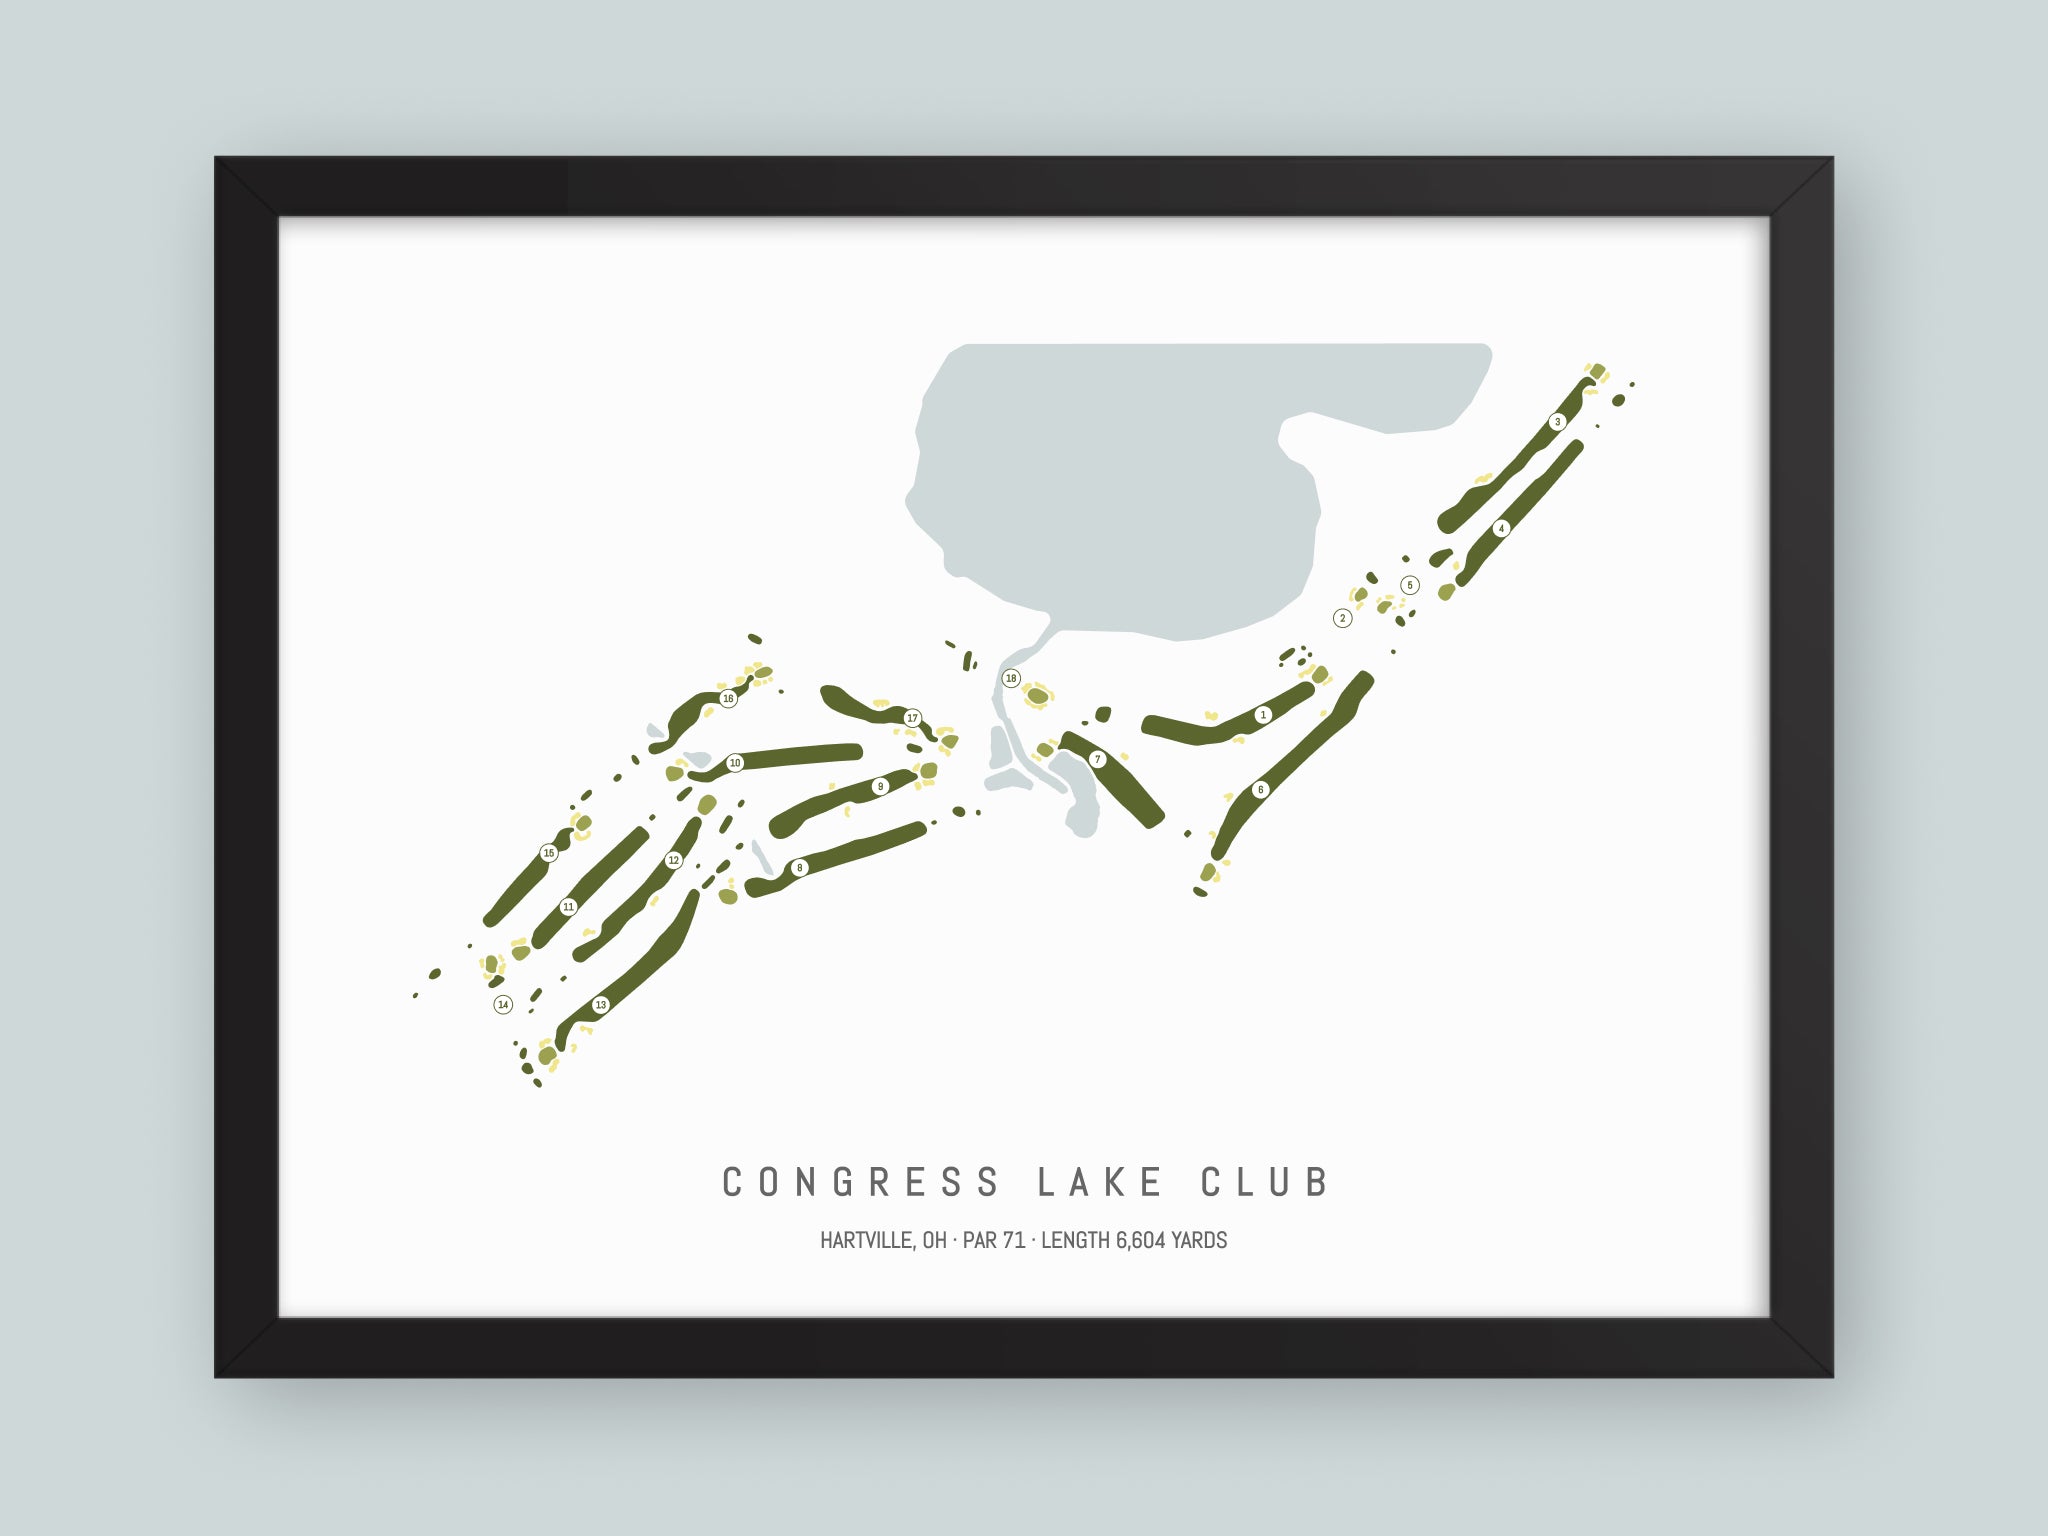 Congress Lake Club